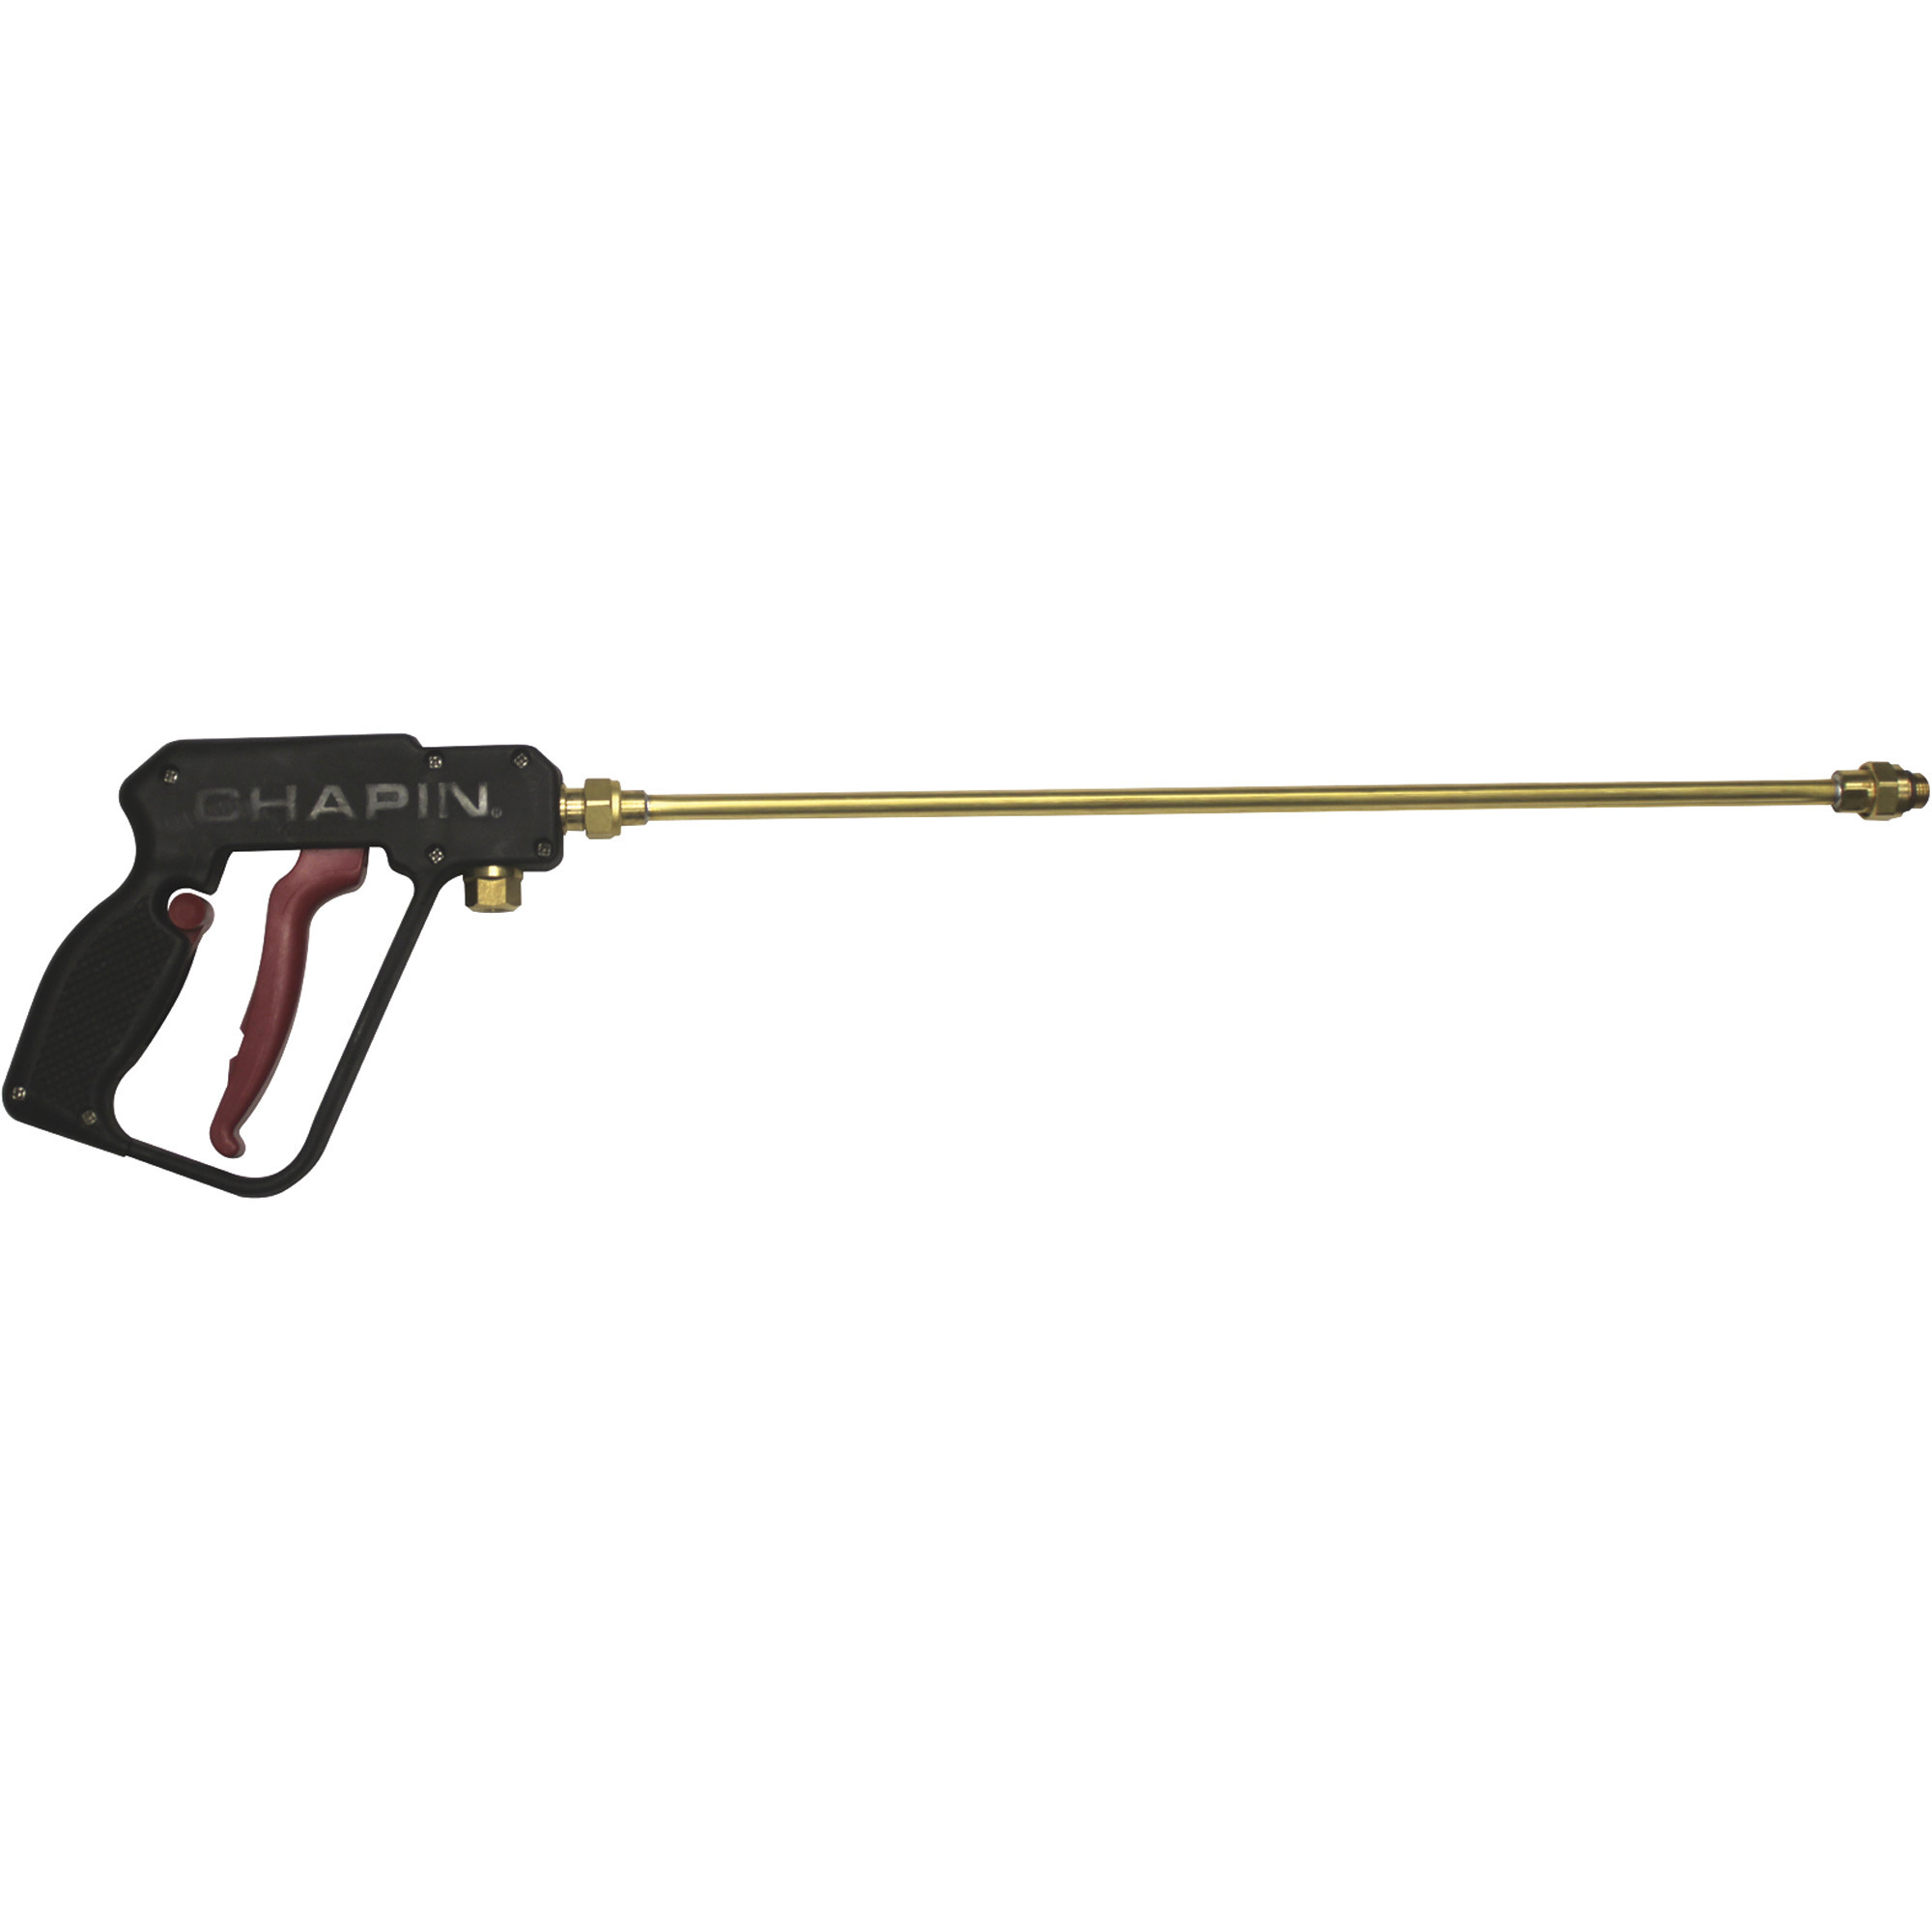 Chapin Shut-Off Spray Gun, 19Inch, 1 GPM, 45 PSI, Model 6-8135